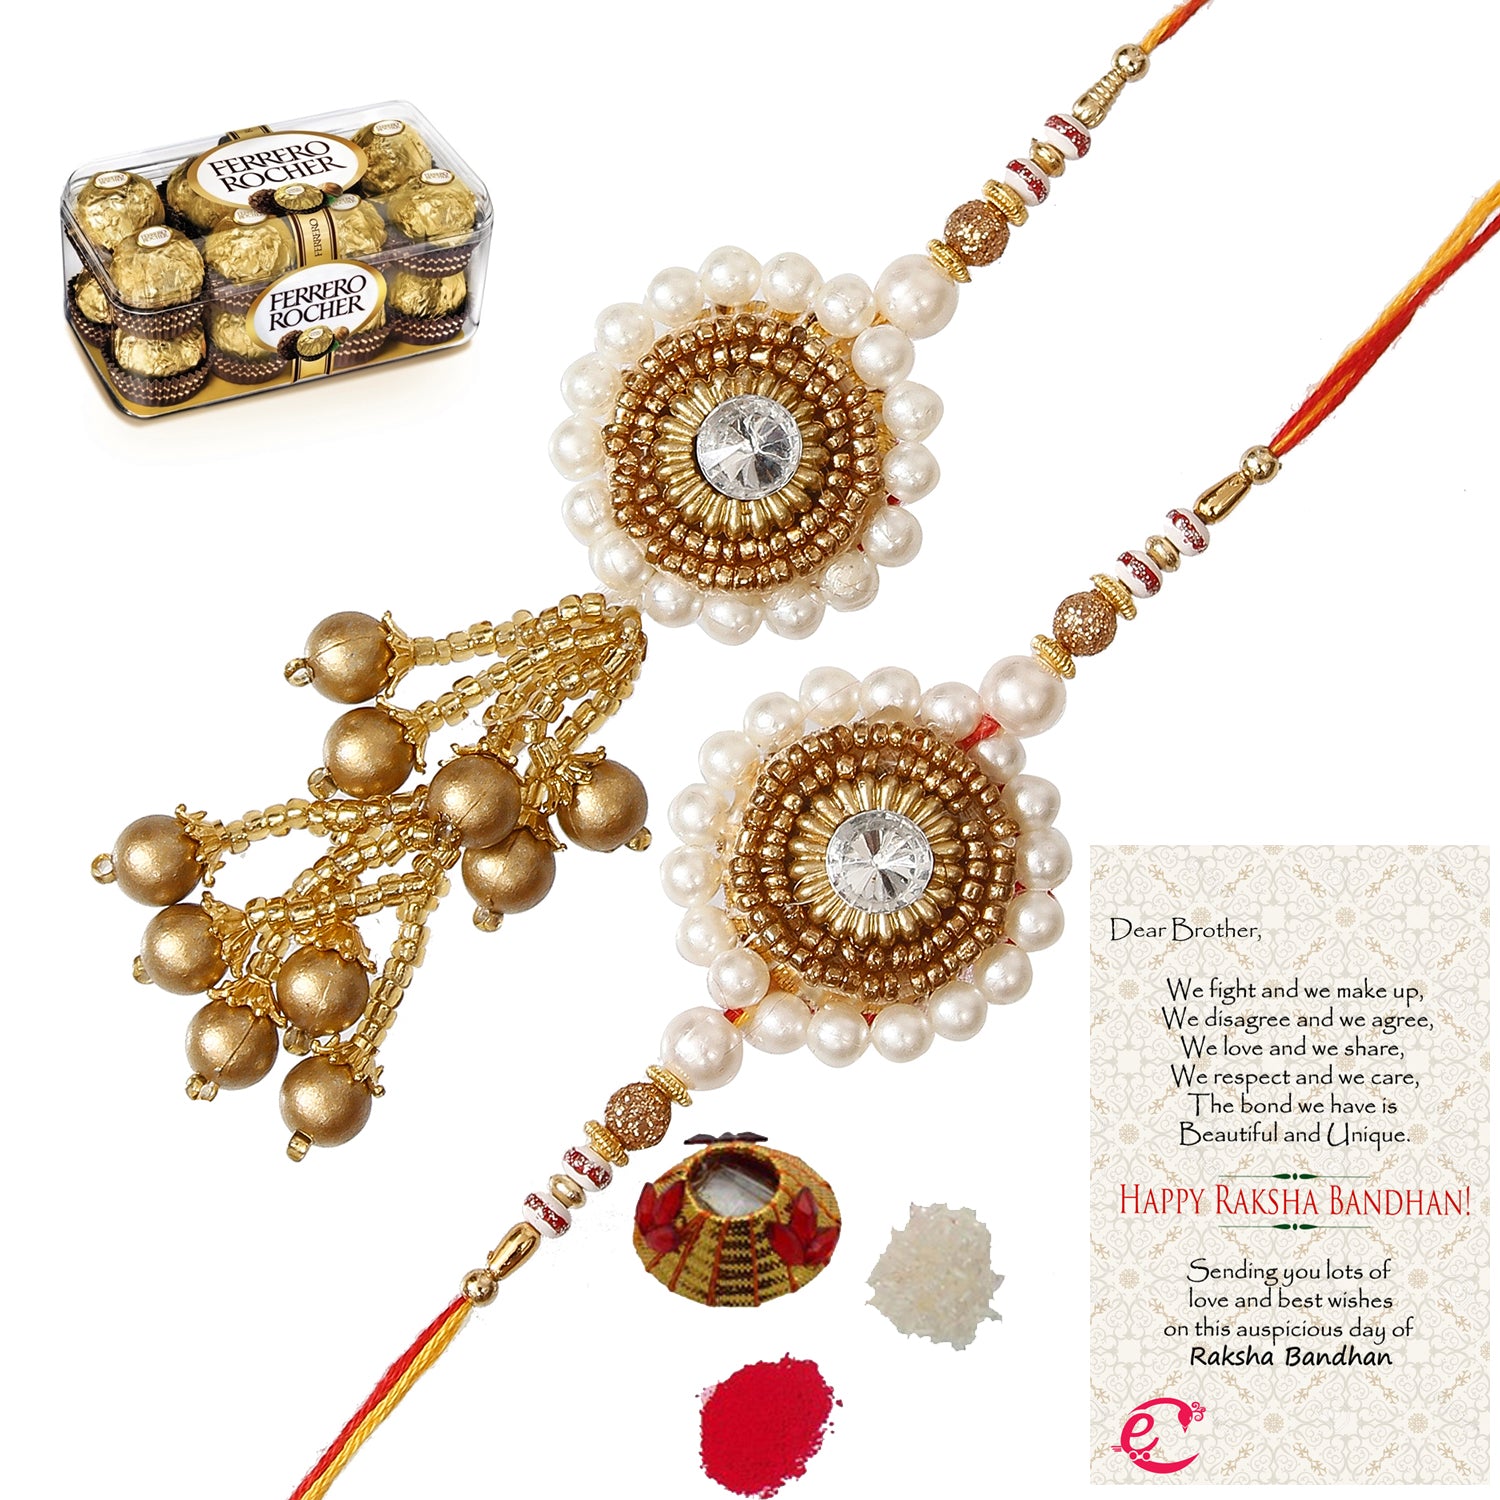 Designer Bhaiya Bhabhi Rakhi with Ferrero Rocher (16 pcs) and Roli Tikka Matki, Best Wishes Greeting Card